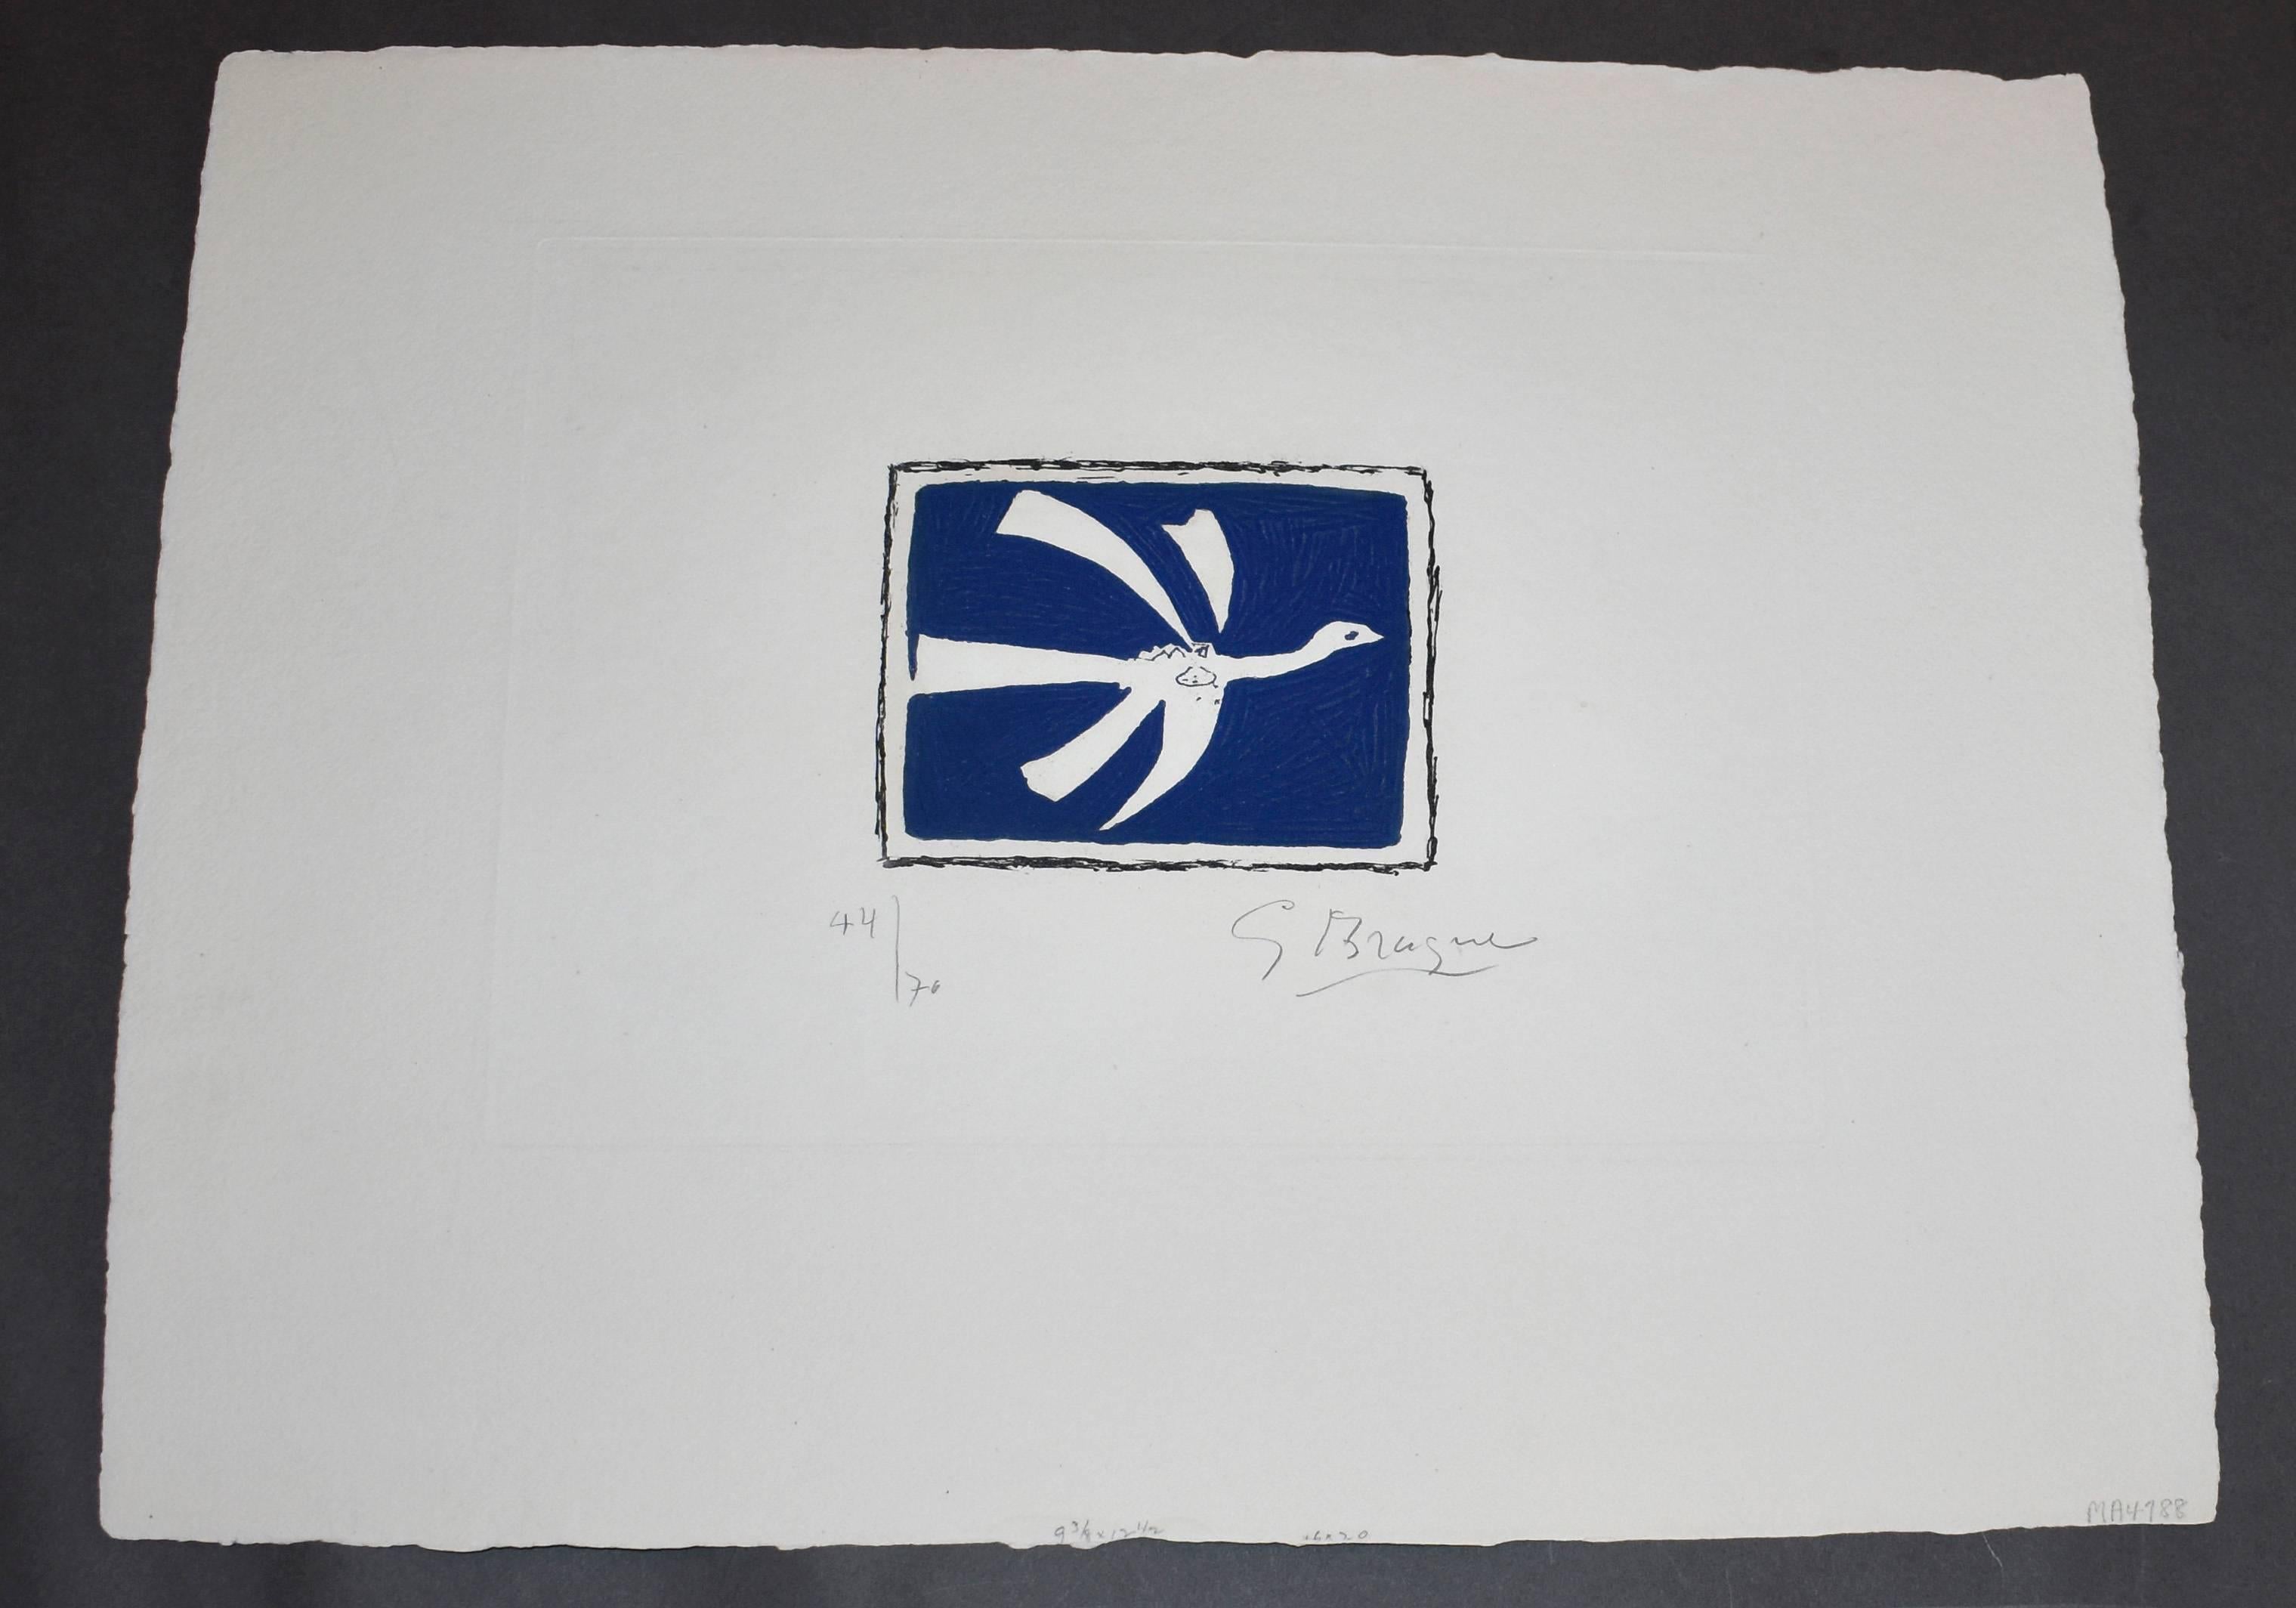 Artist: Georges Braque
Medium: Aquatint
Portfolio: Août
Year: 1958
Edition: 44/70
Framed Size: 25 1/4 x 28 inches
Image Size: 4 x 5 inches
Sheet Size: 8 3/4 x 11 inches (plate size)
Reference: Vallier 135